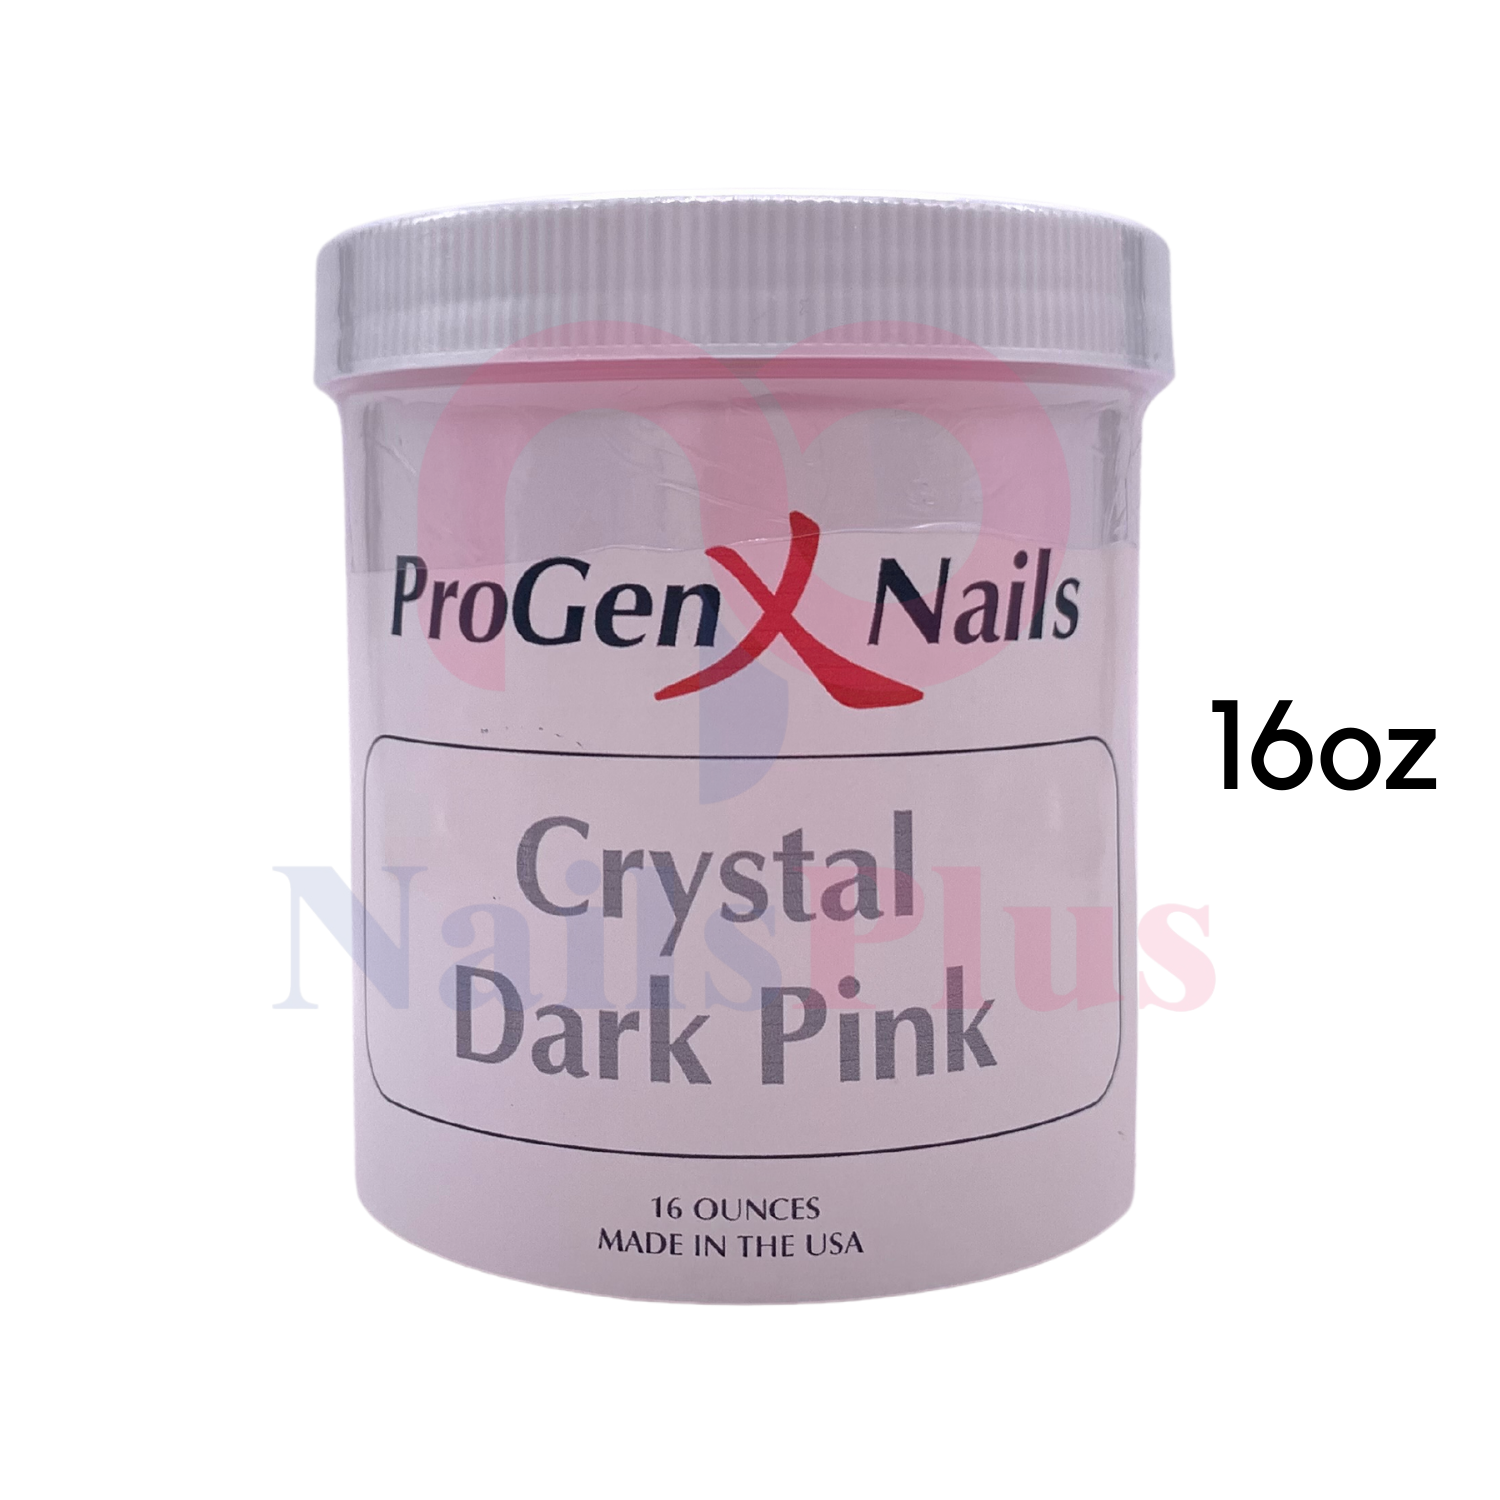 Crystal Dark Pink